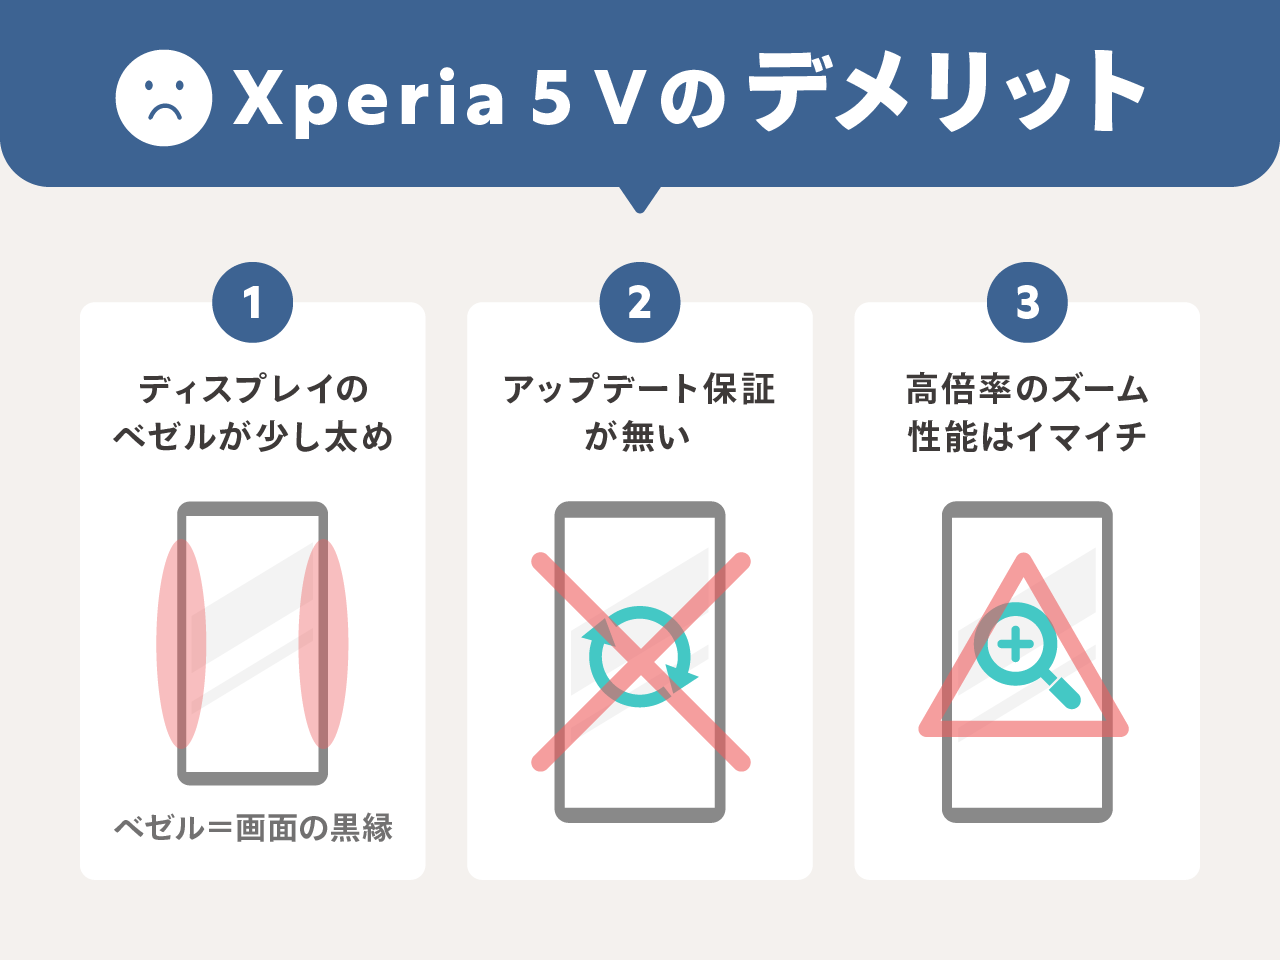 Xperia 5 Vのメリット